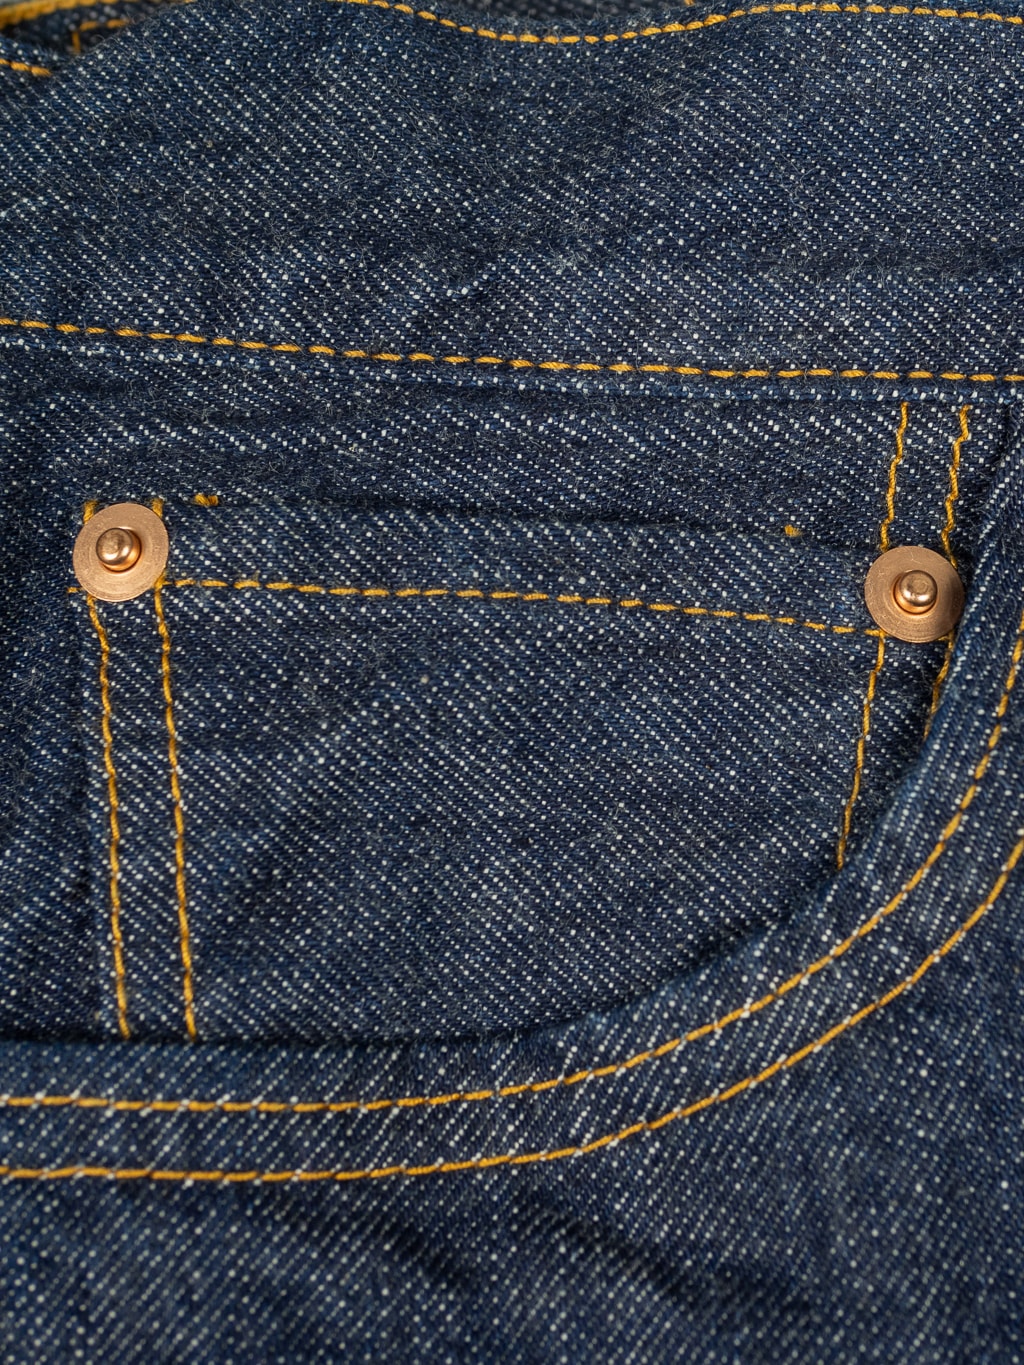 tcb 60s regular straight jeans coin pocket